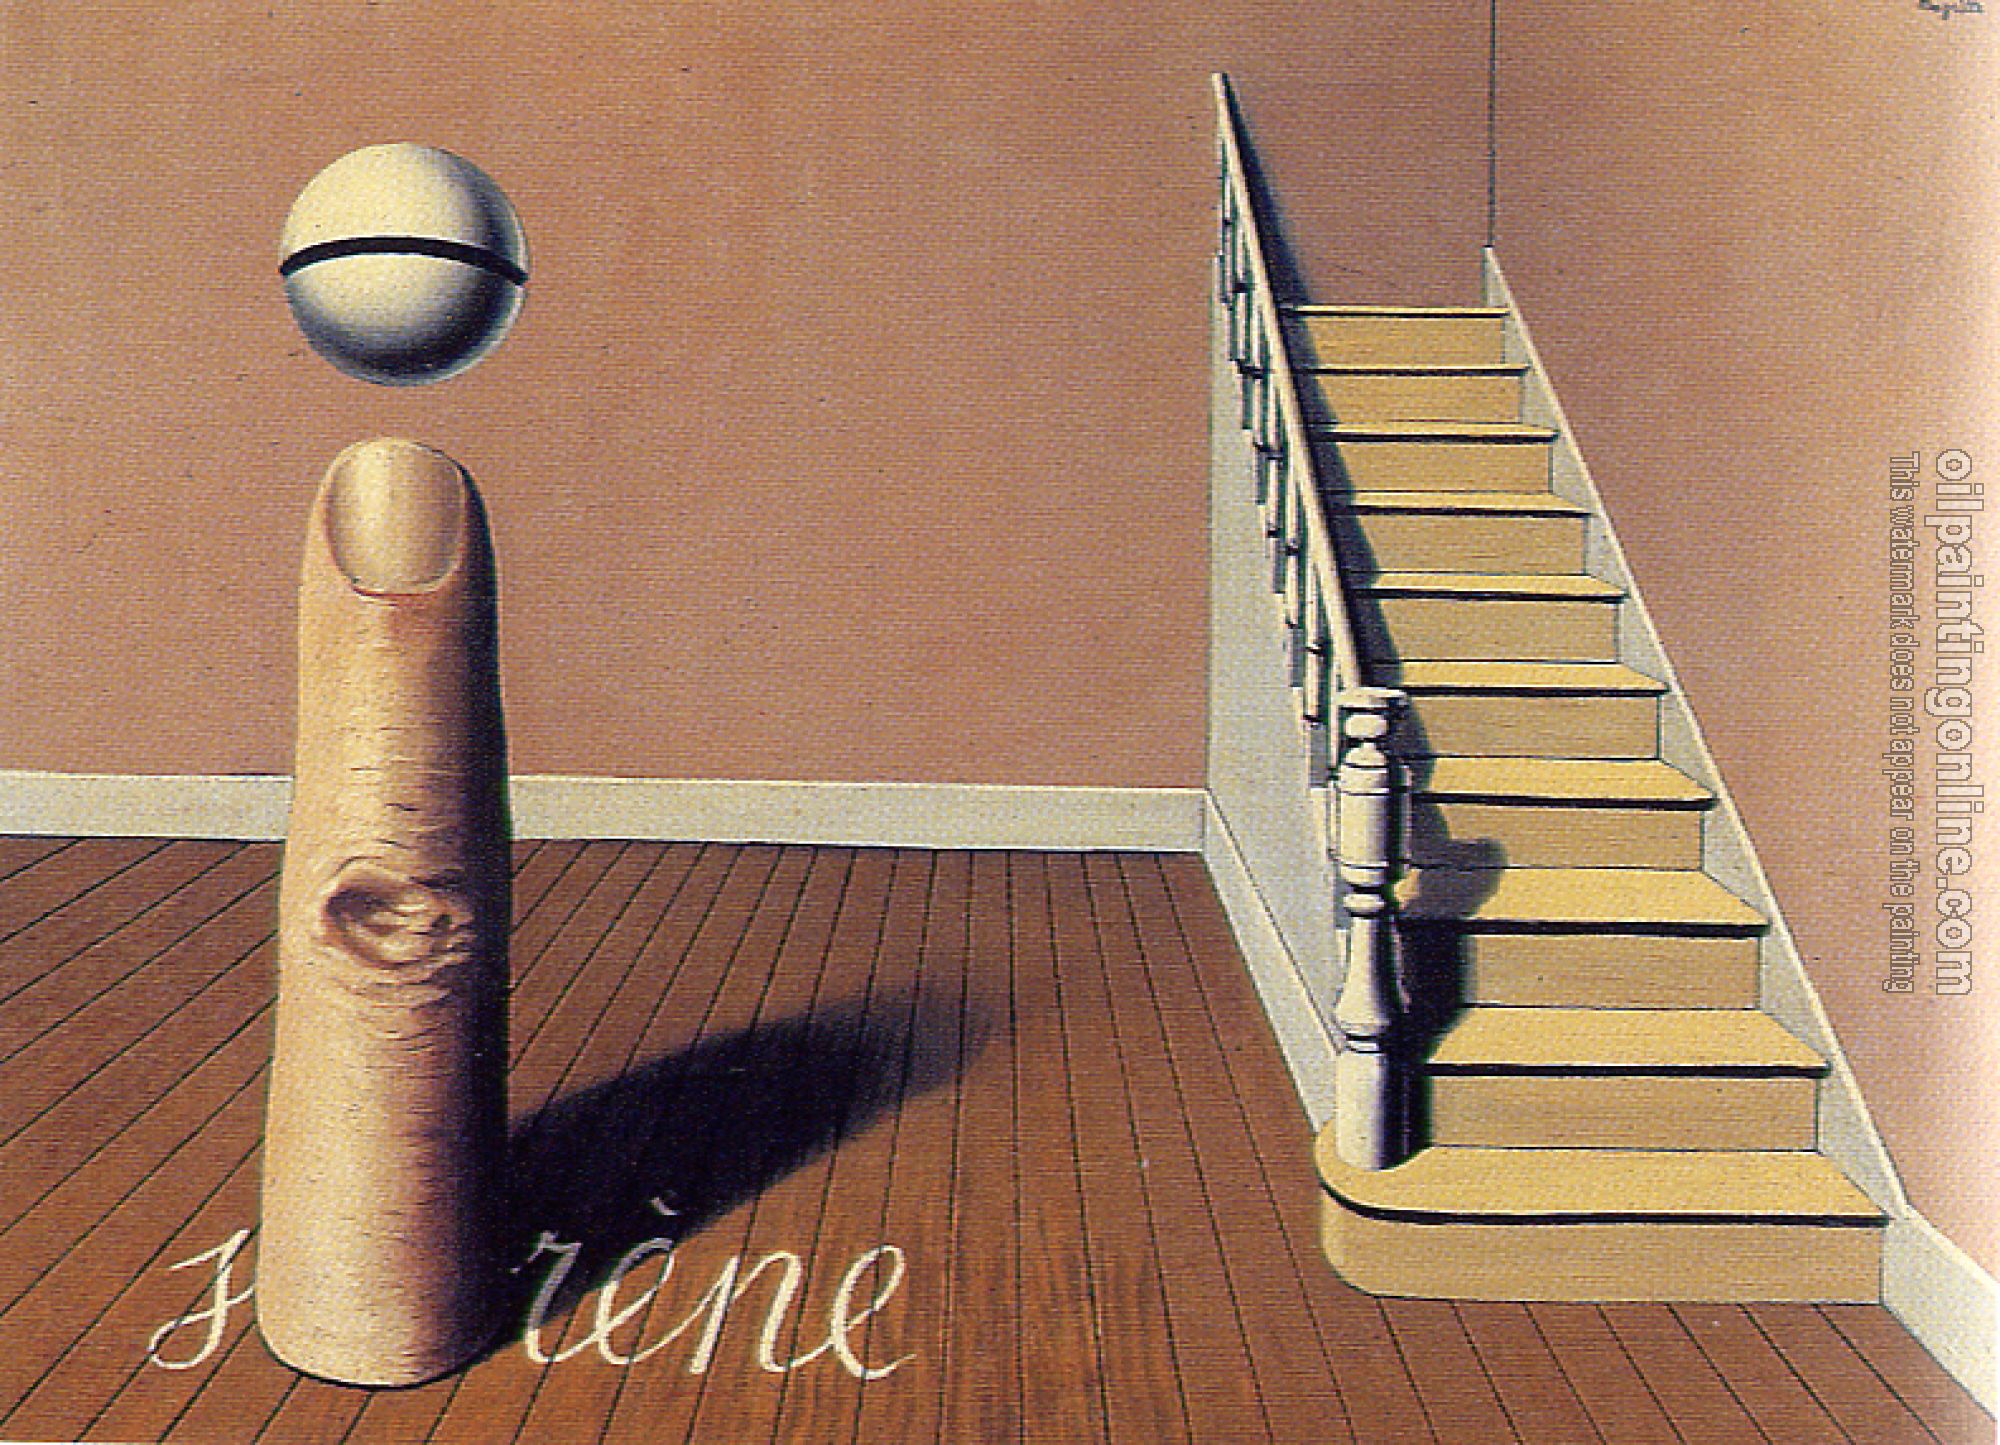 Magritte, Rene - irene or forbidden literature